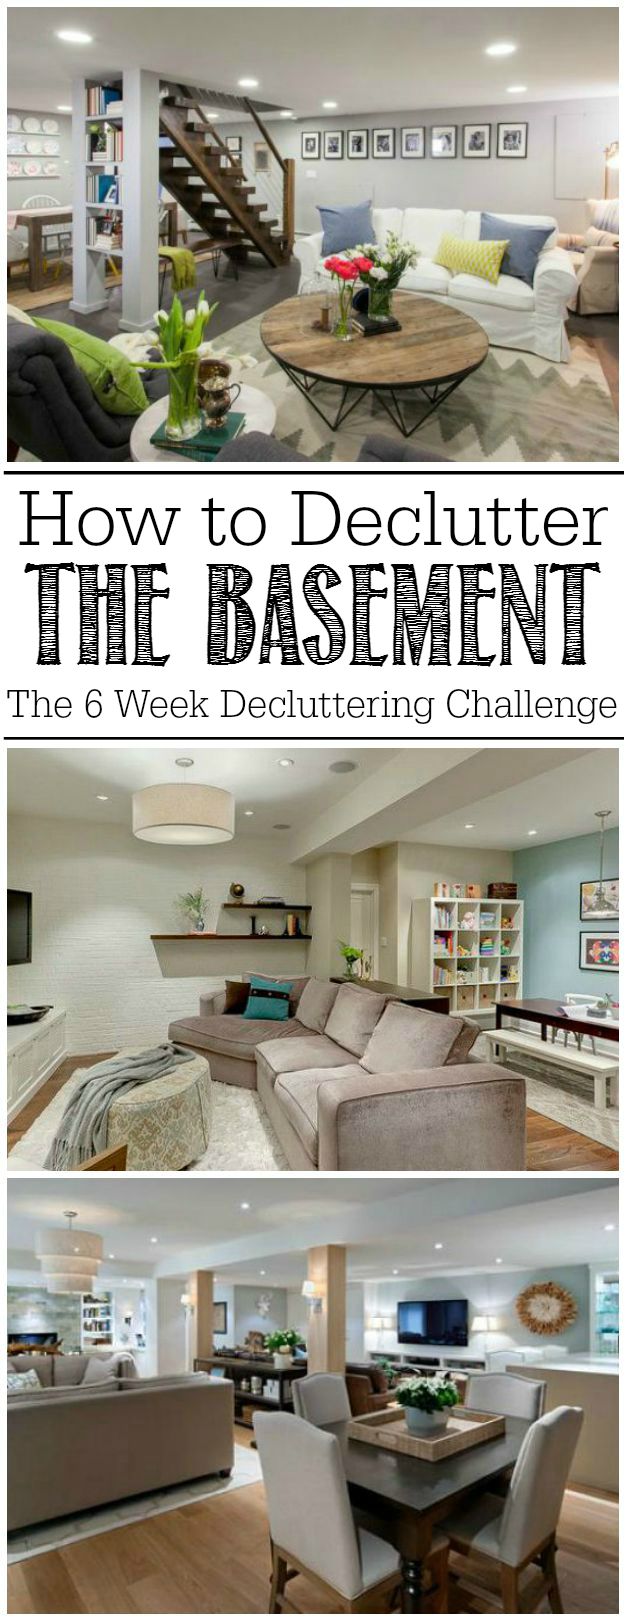 Ideas for decluttering the basement.